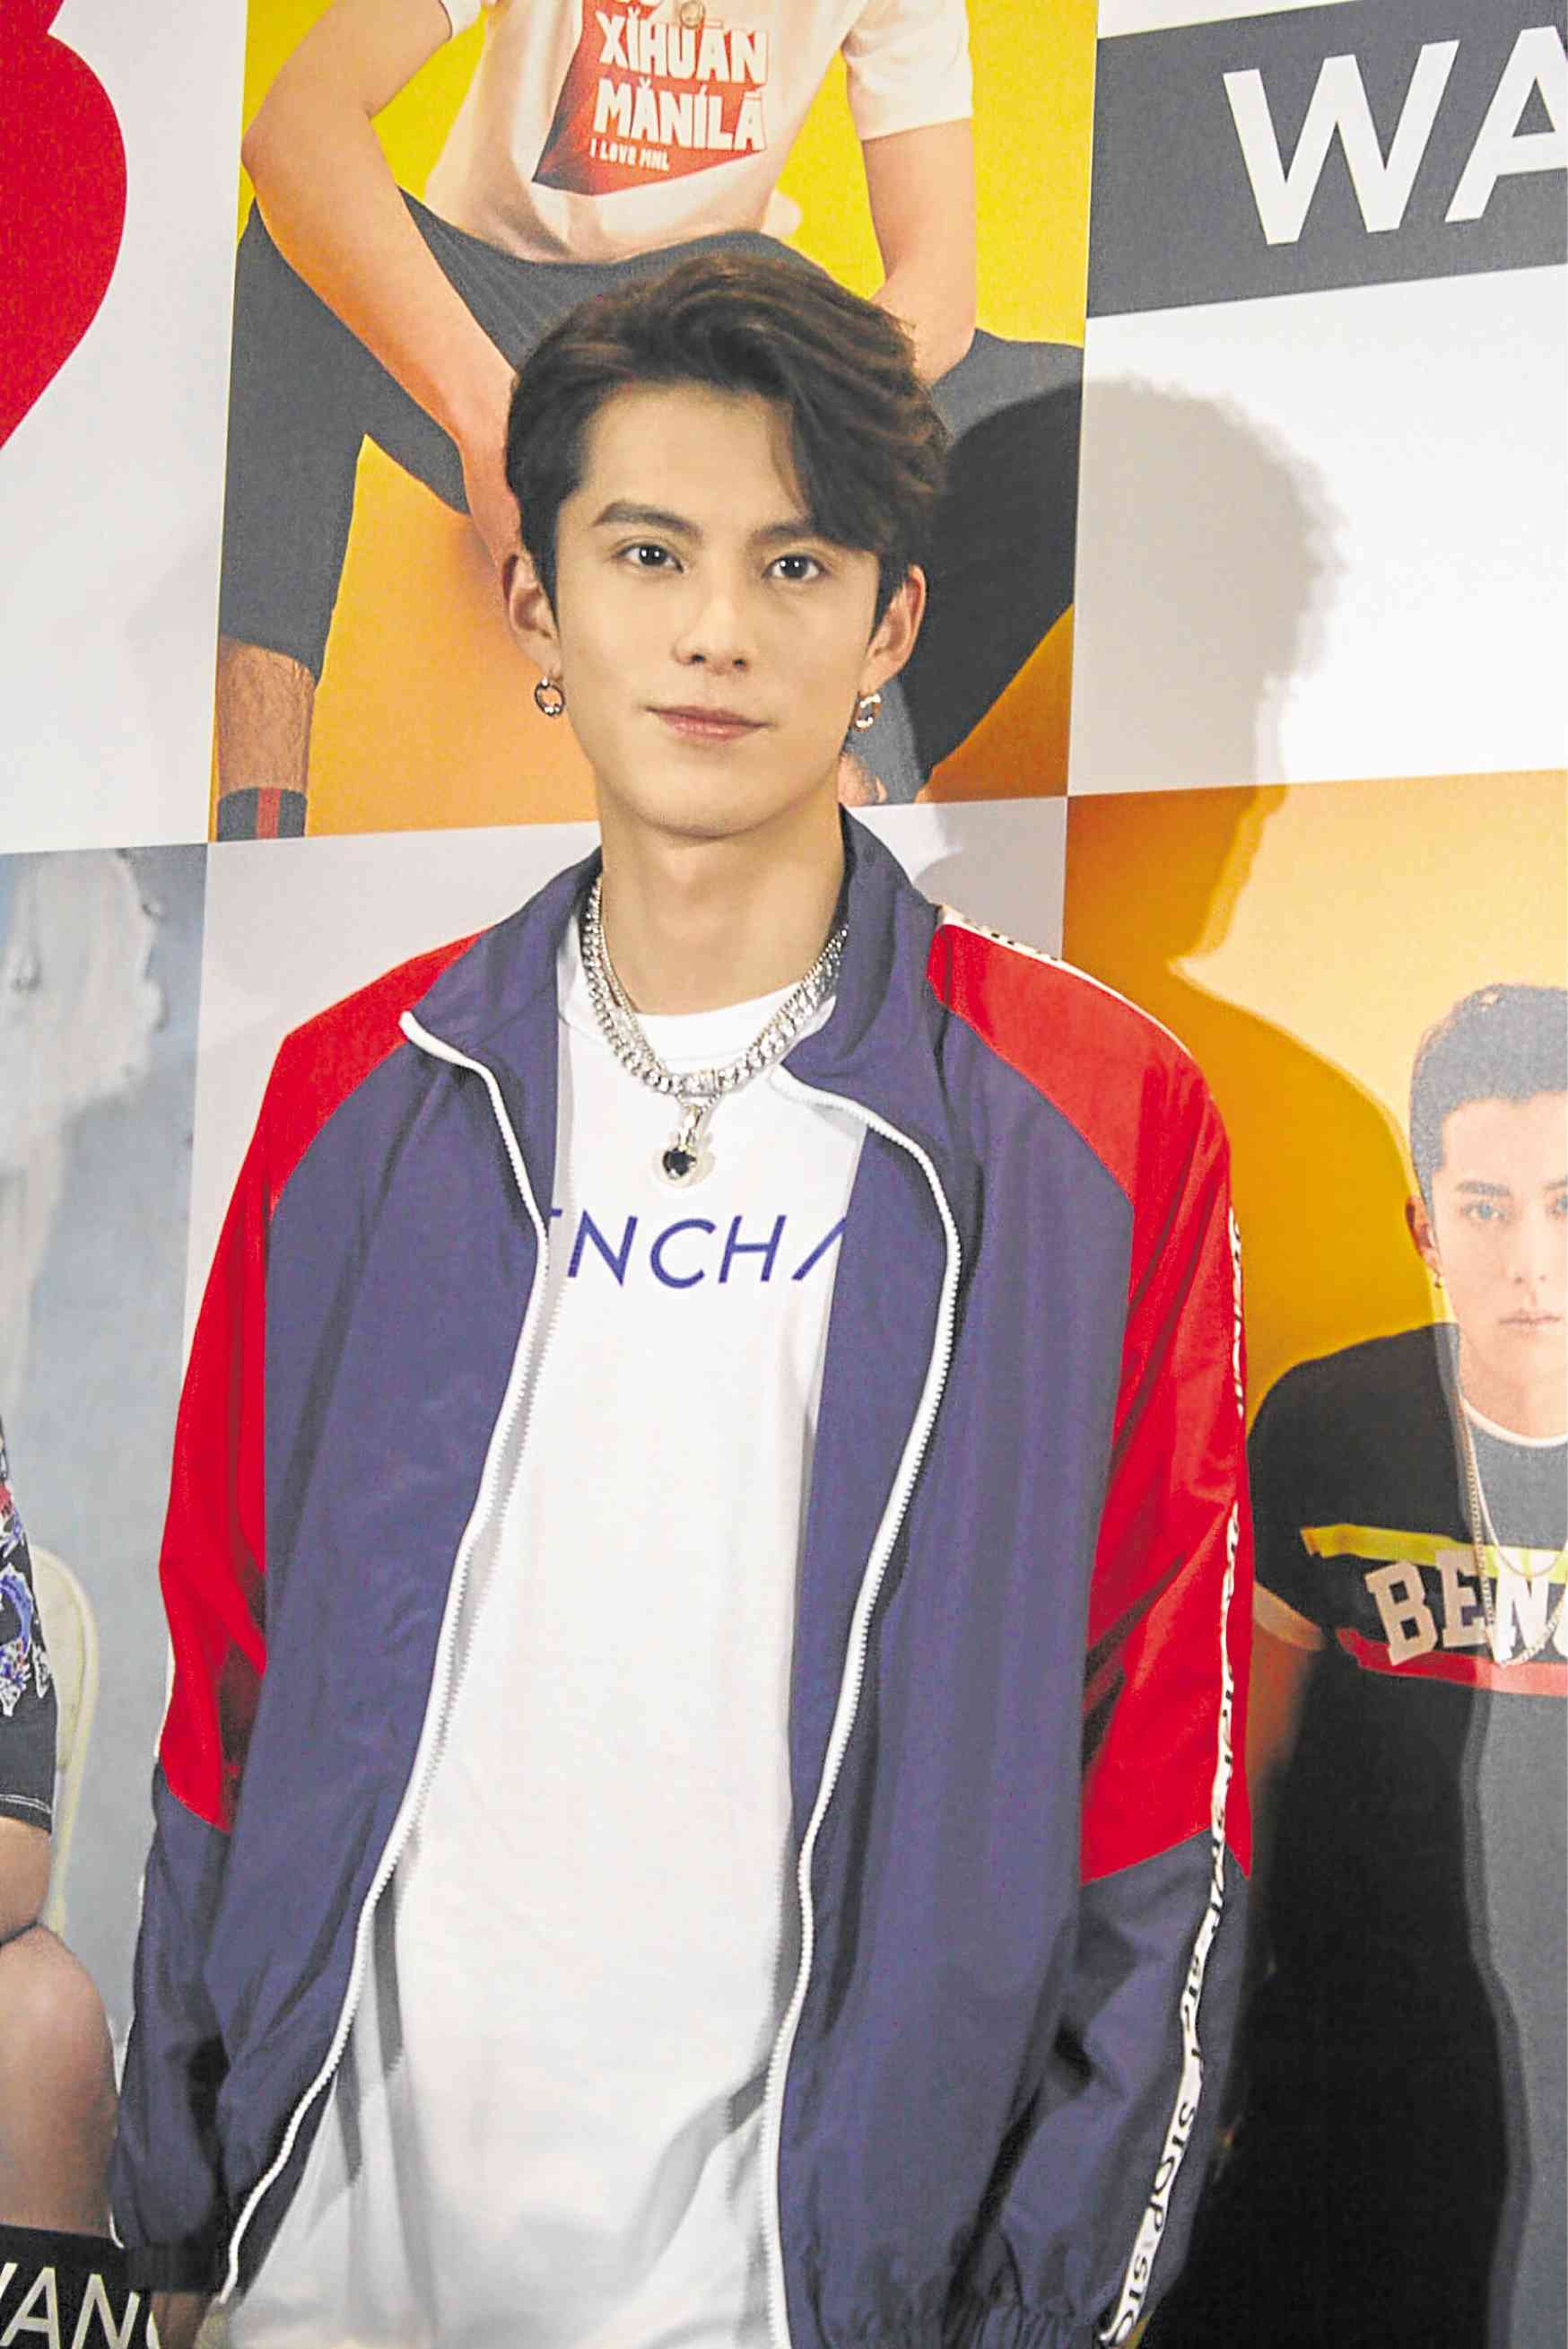 LOOK: 'Meteor Garden' star Dylan Wang is the new Bench endorser